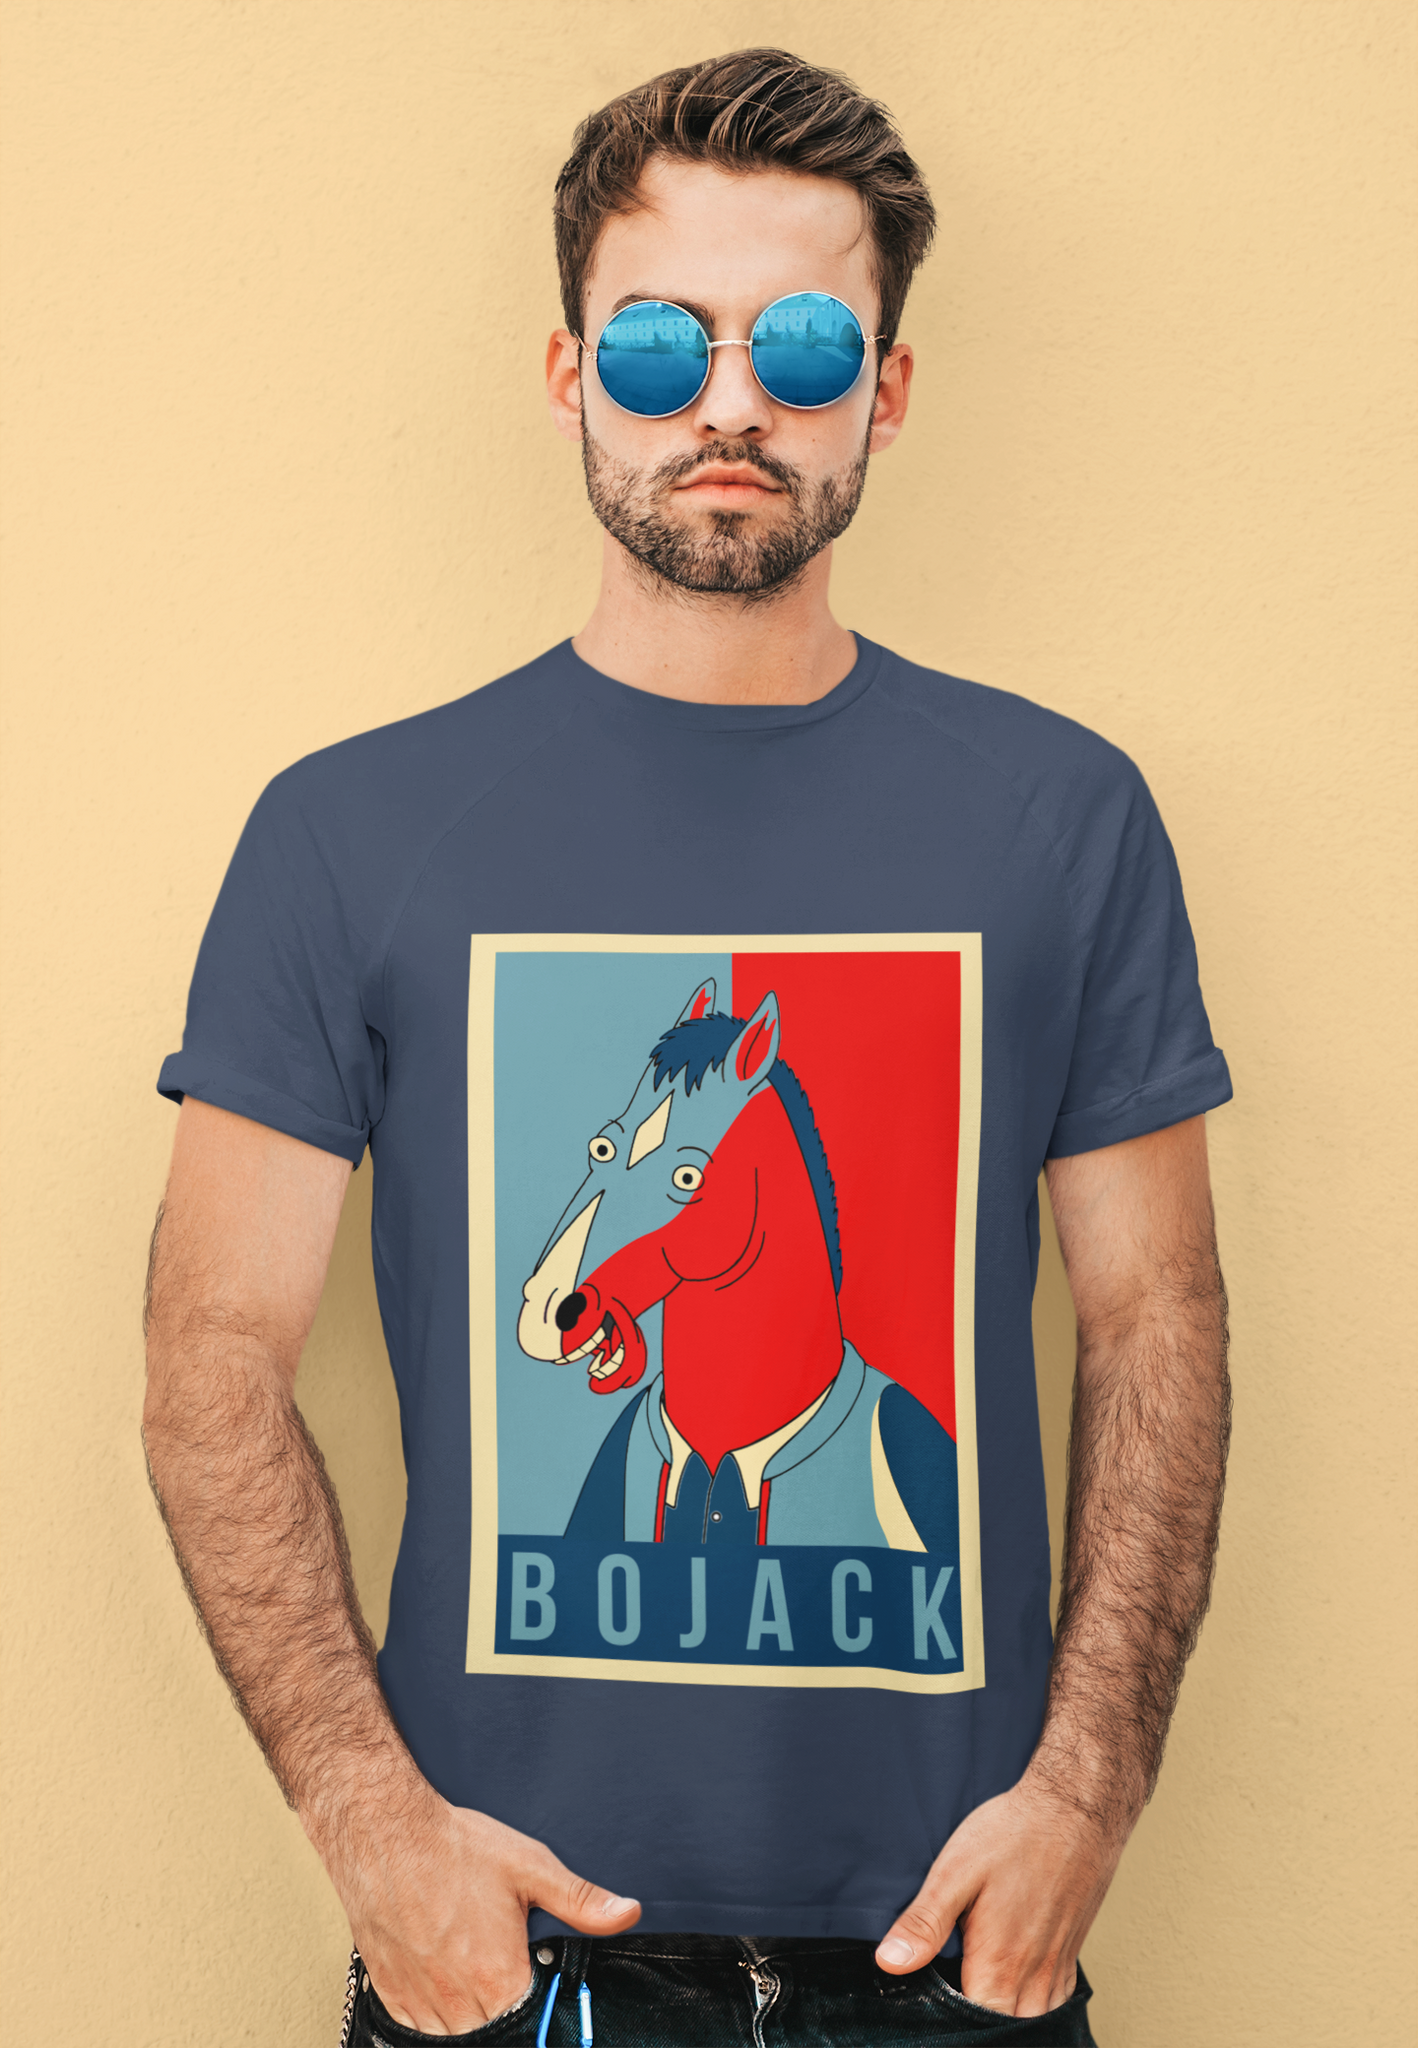 Bojack Horseman T Shirt, Bojack Poster Tshirt